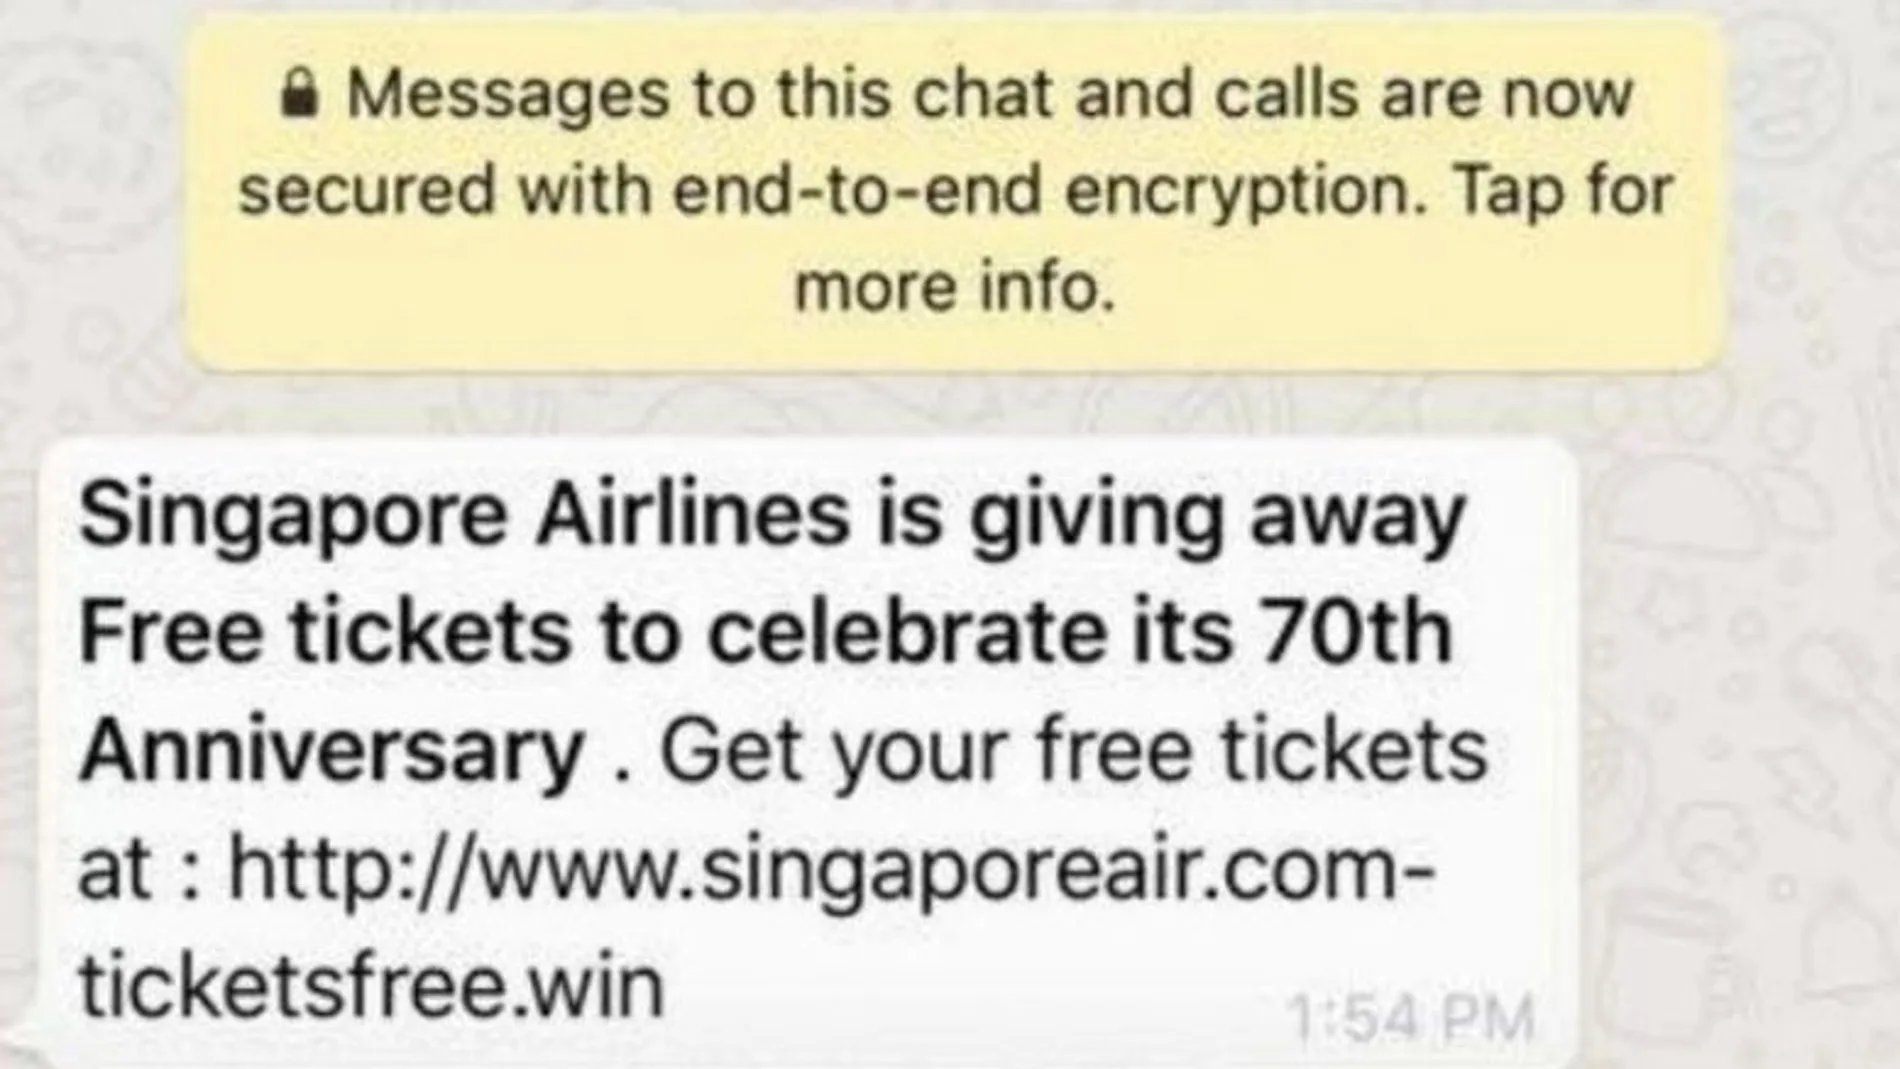 Vuelve a WhatsApp la estafa de billetes de avión gratis